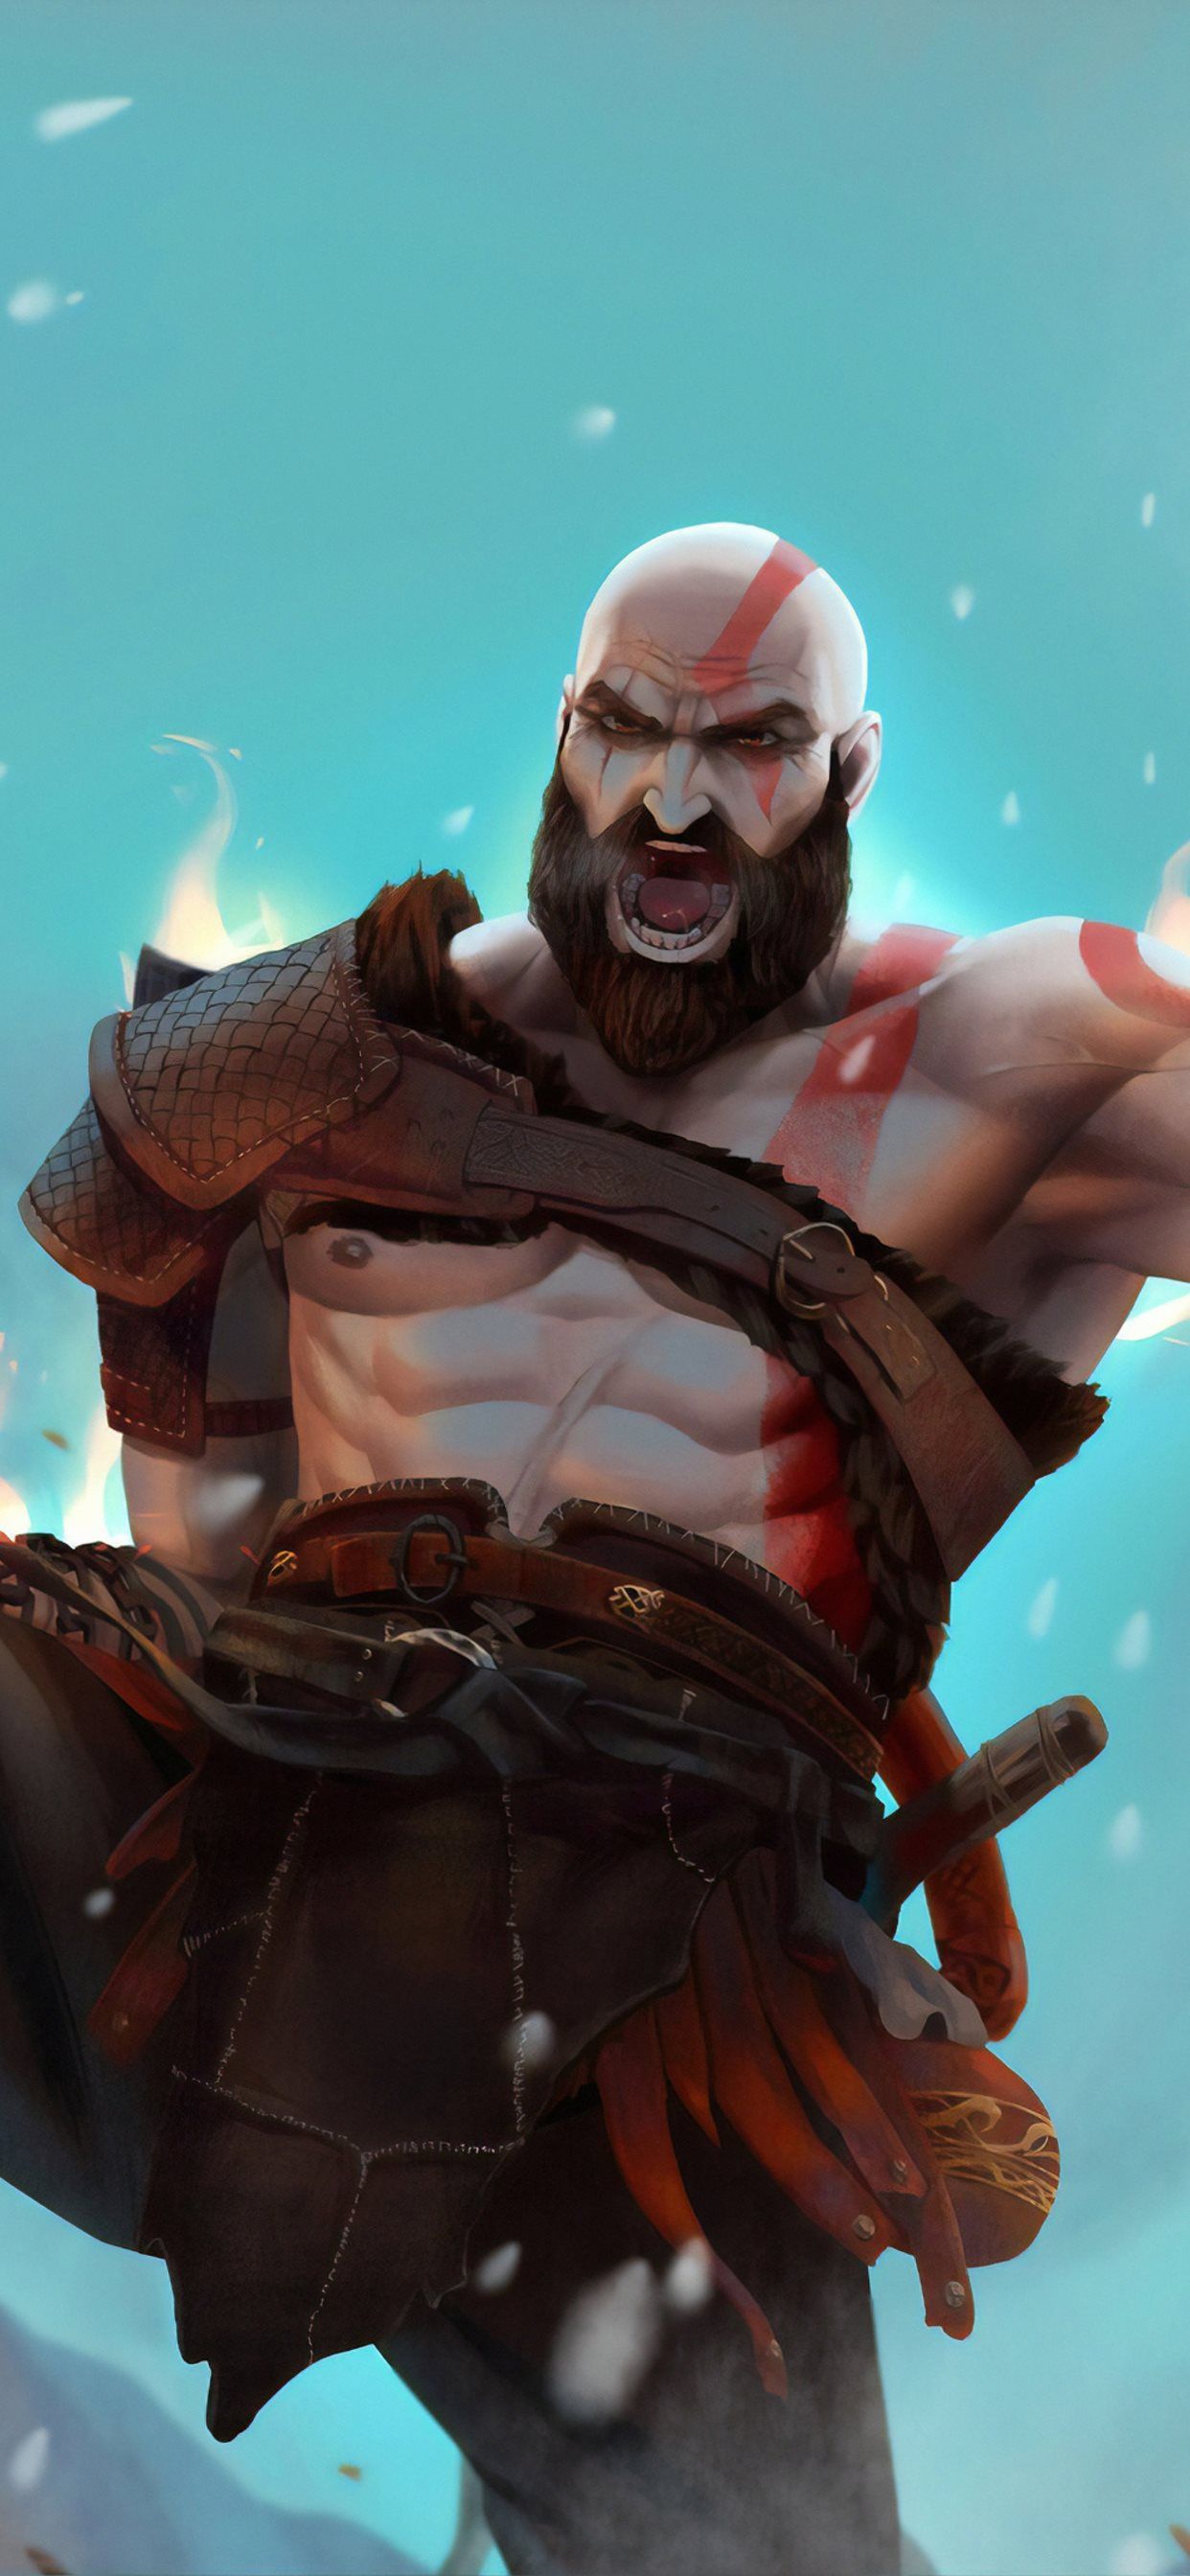 kratos 4k artwork new iPhone X Wallpaper Free Download